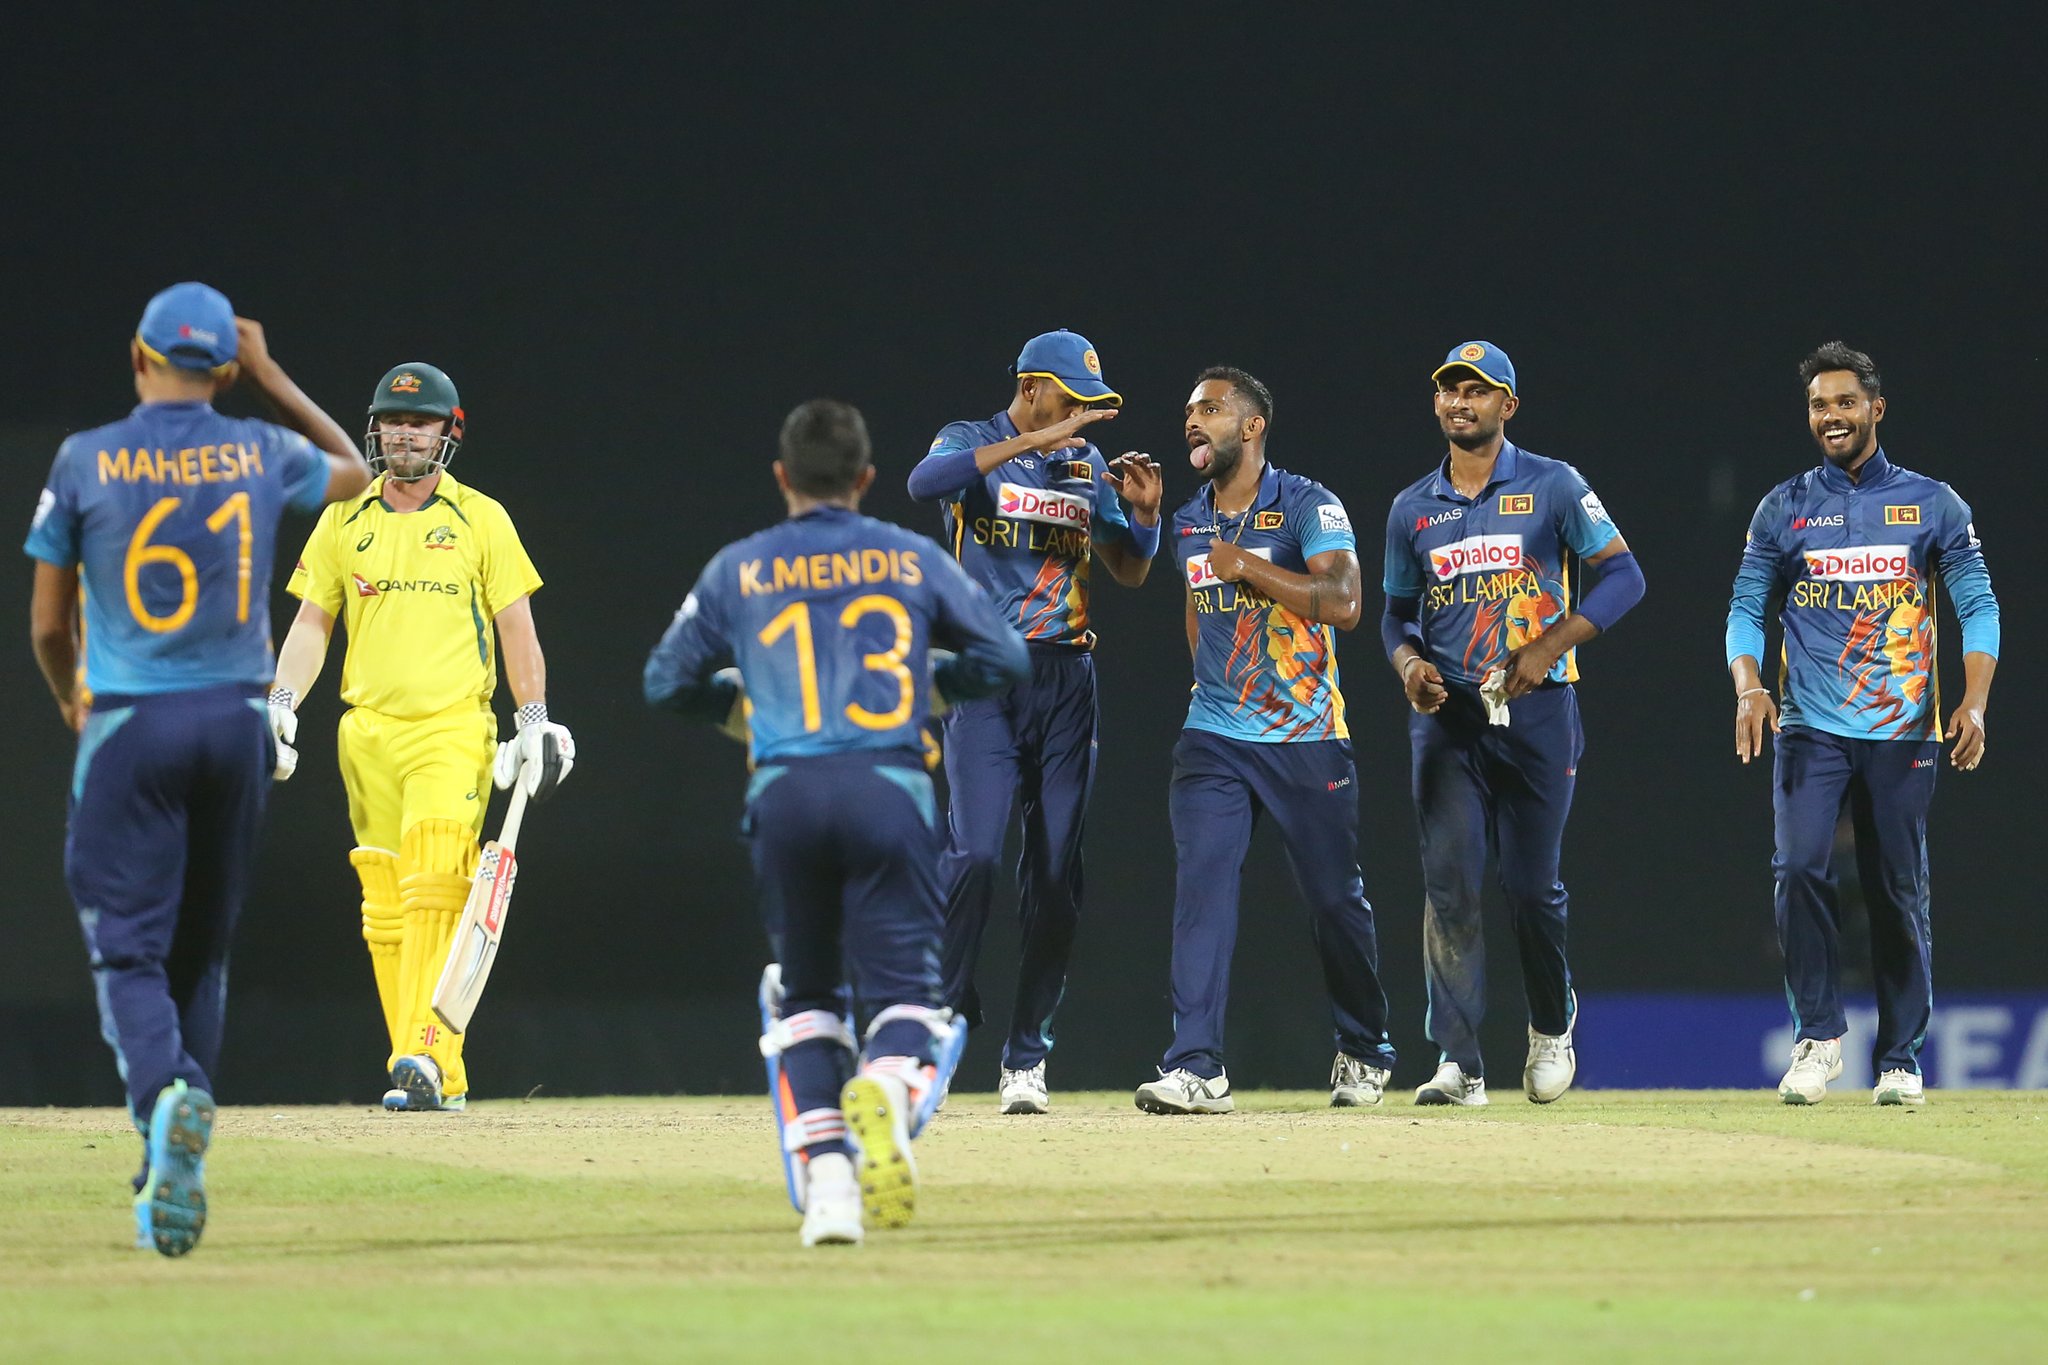 Sri Lanka won the 2nd ODI cricket match against Australia